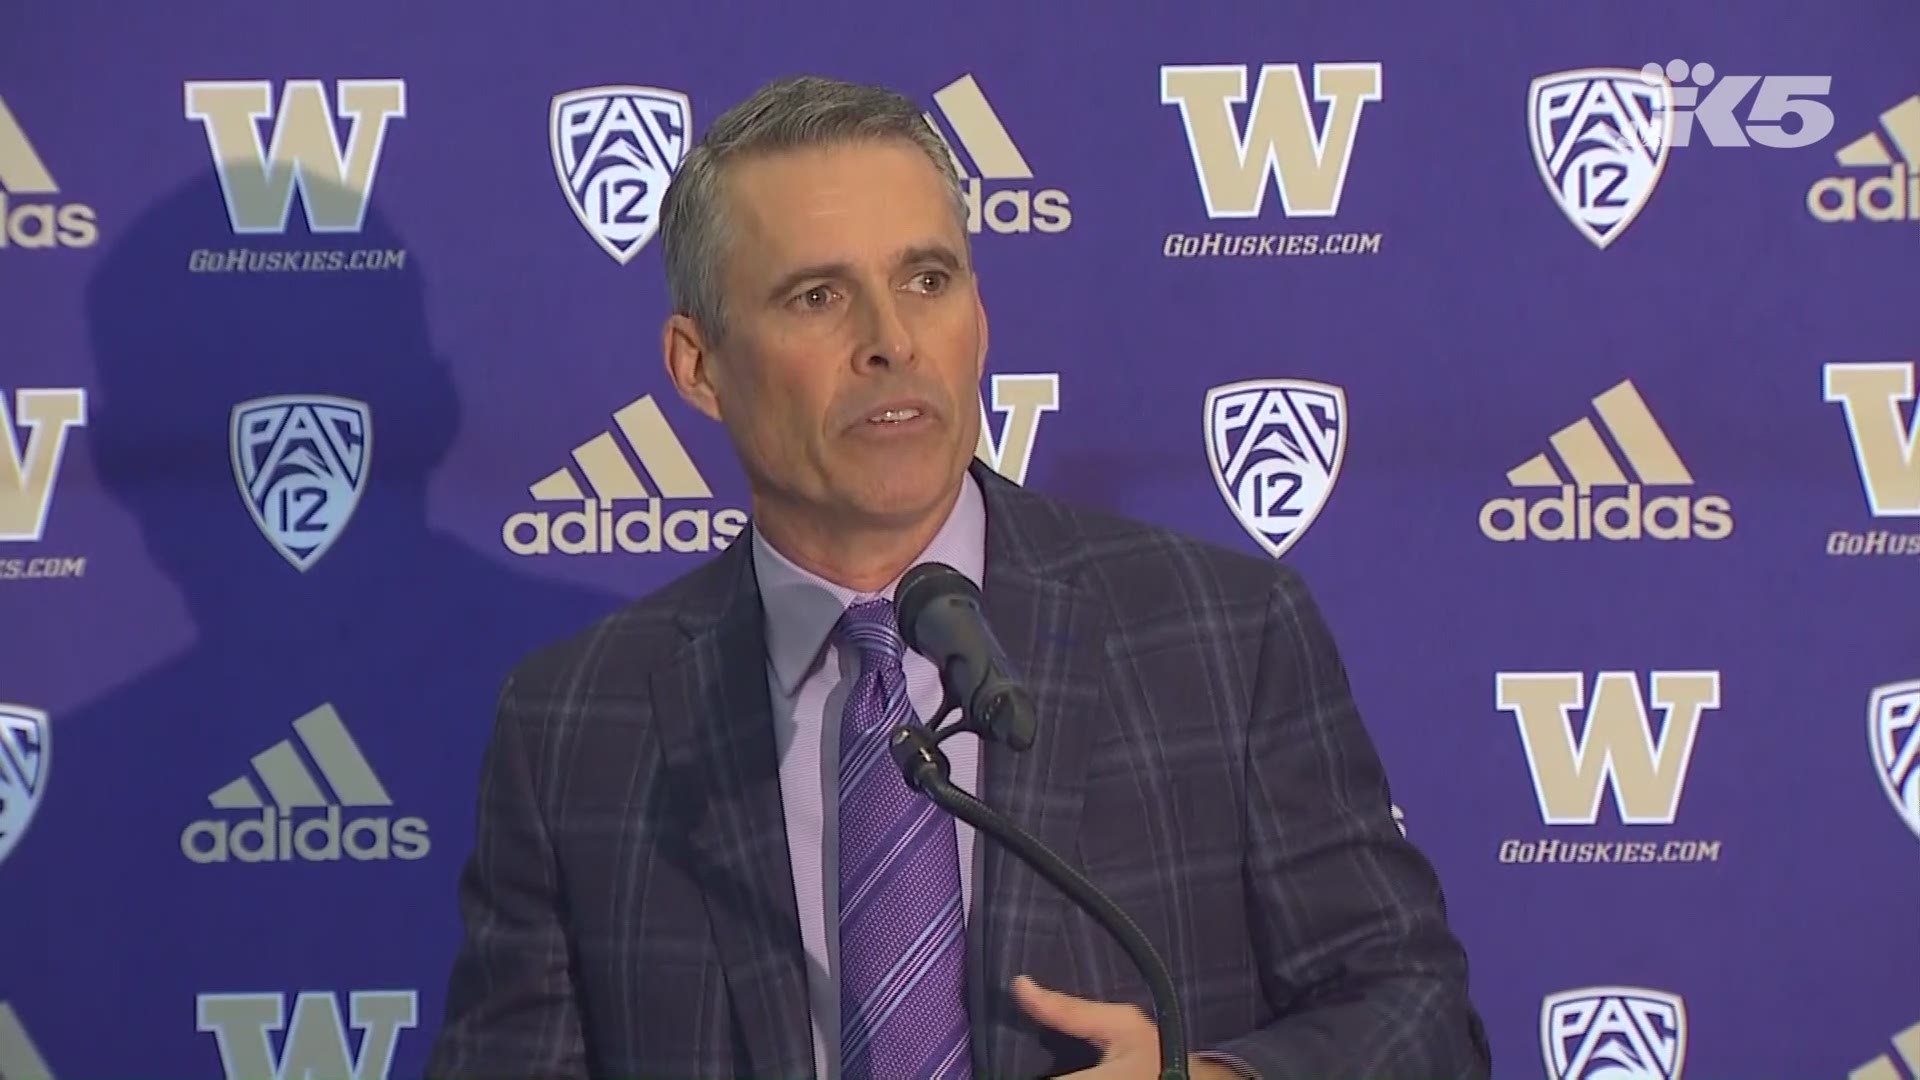 University of Washington head football coach Chris Petersen announces he is stepping down.